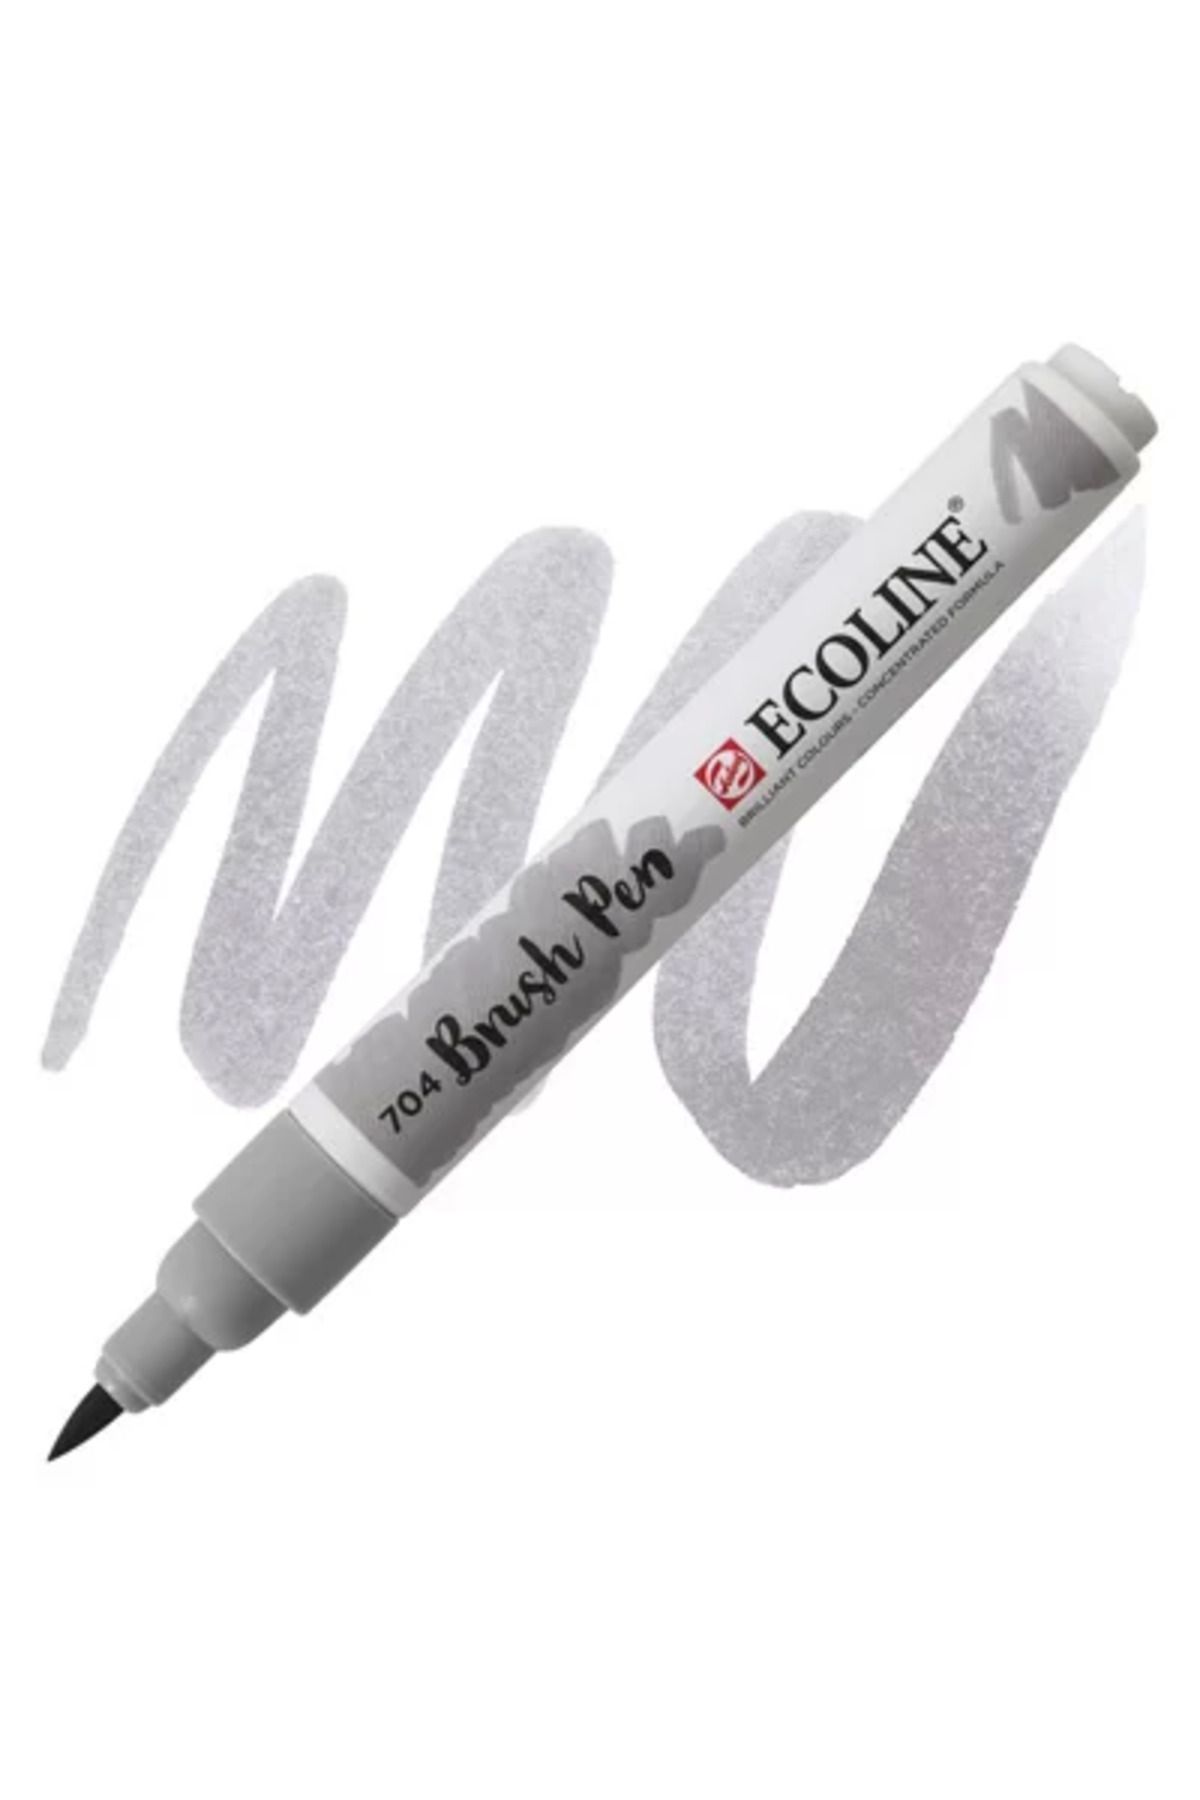 Talens Ecoline Brush Pen Grey